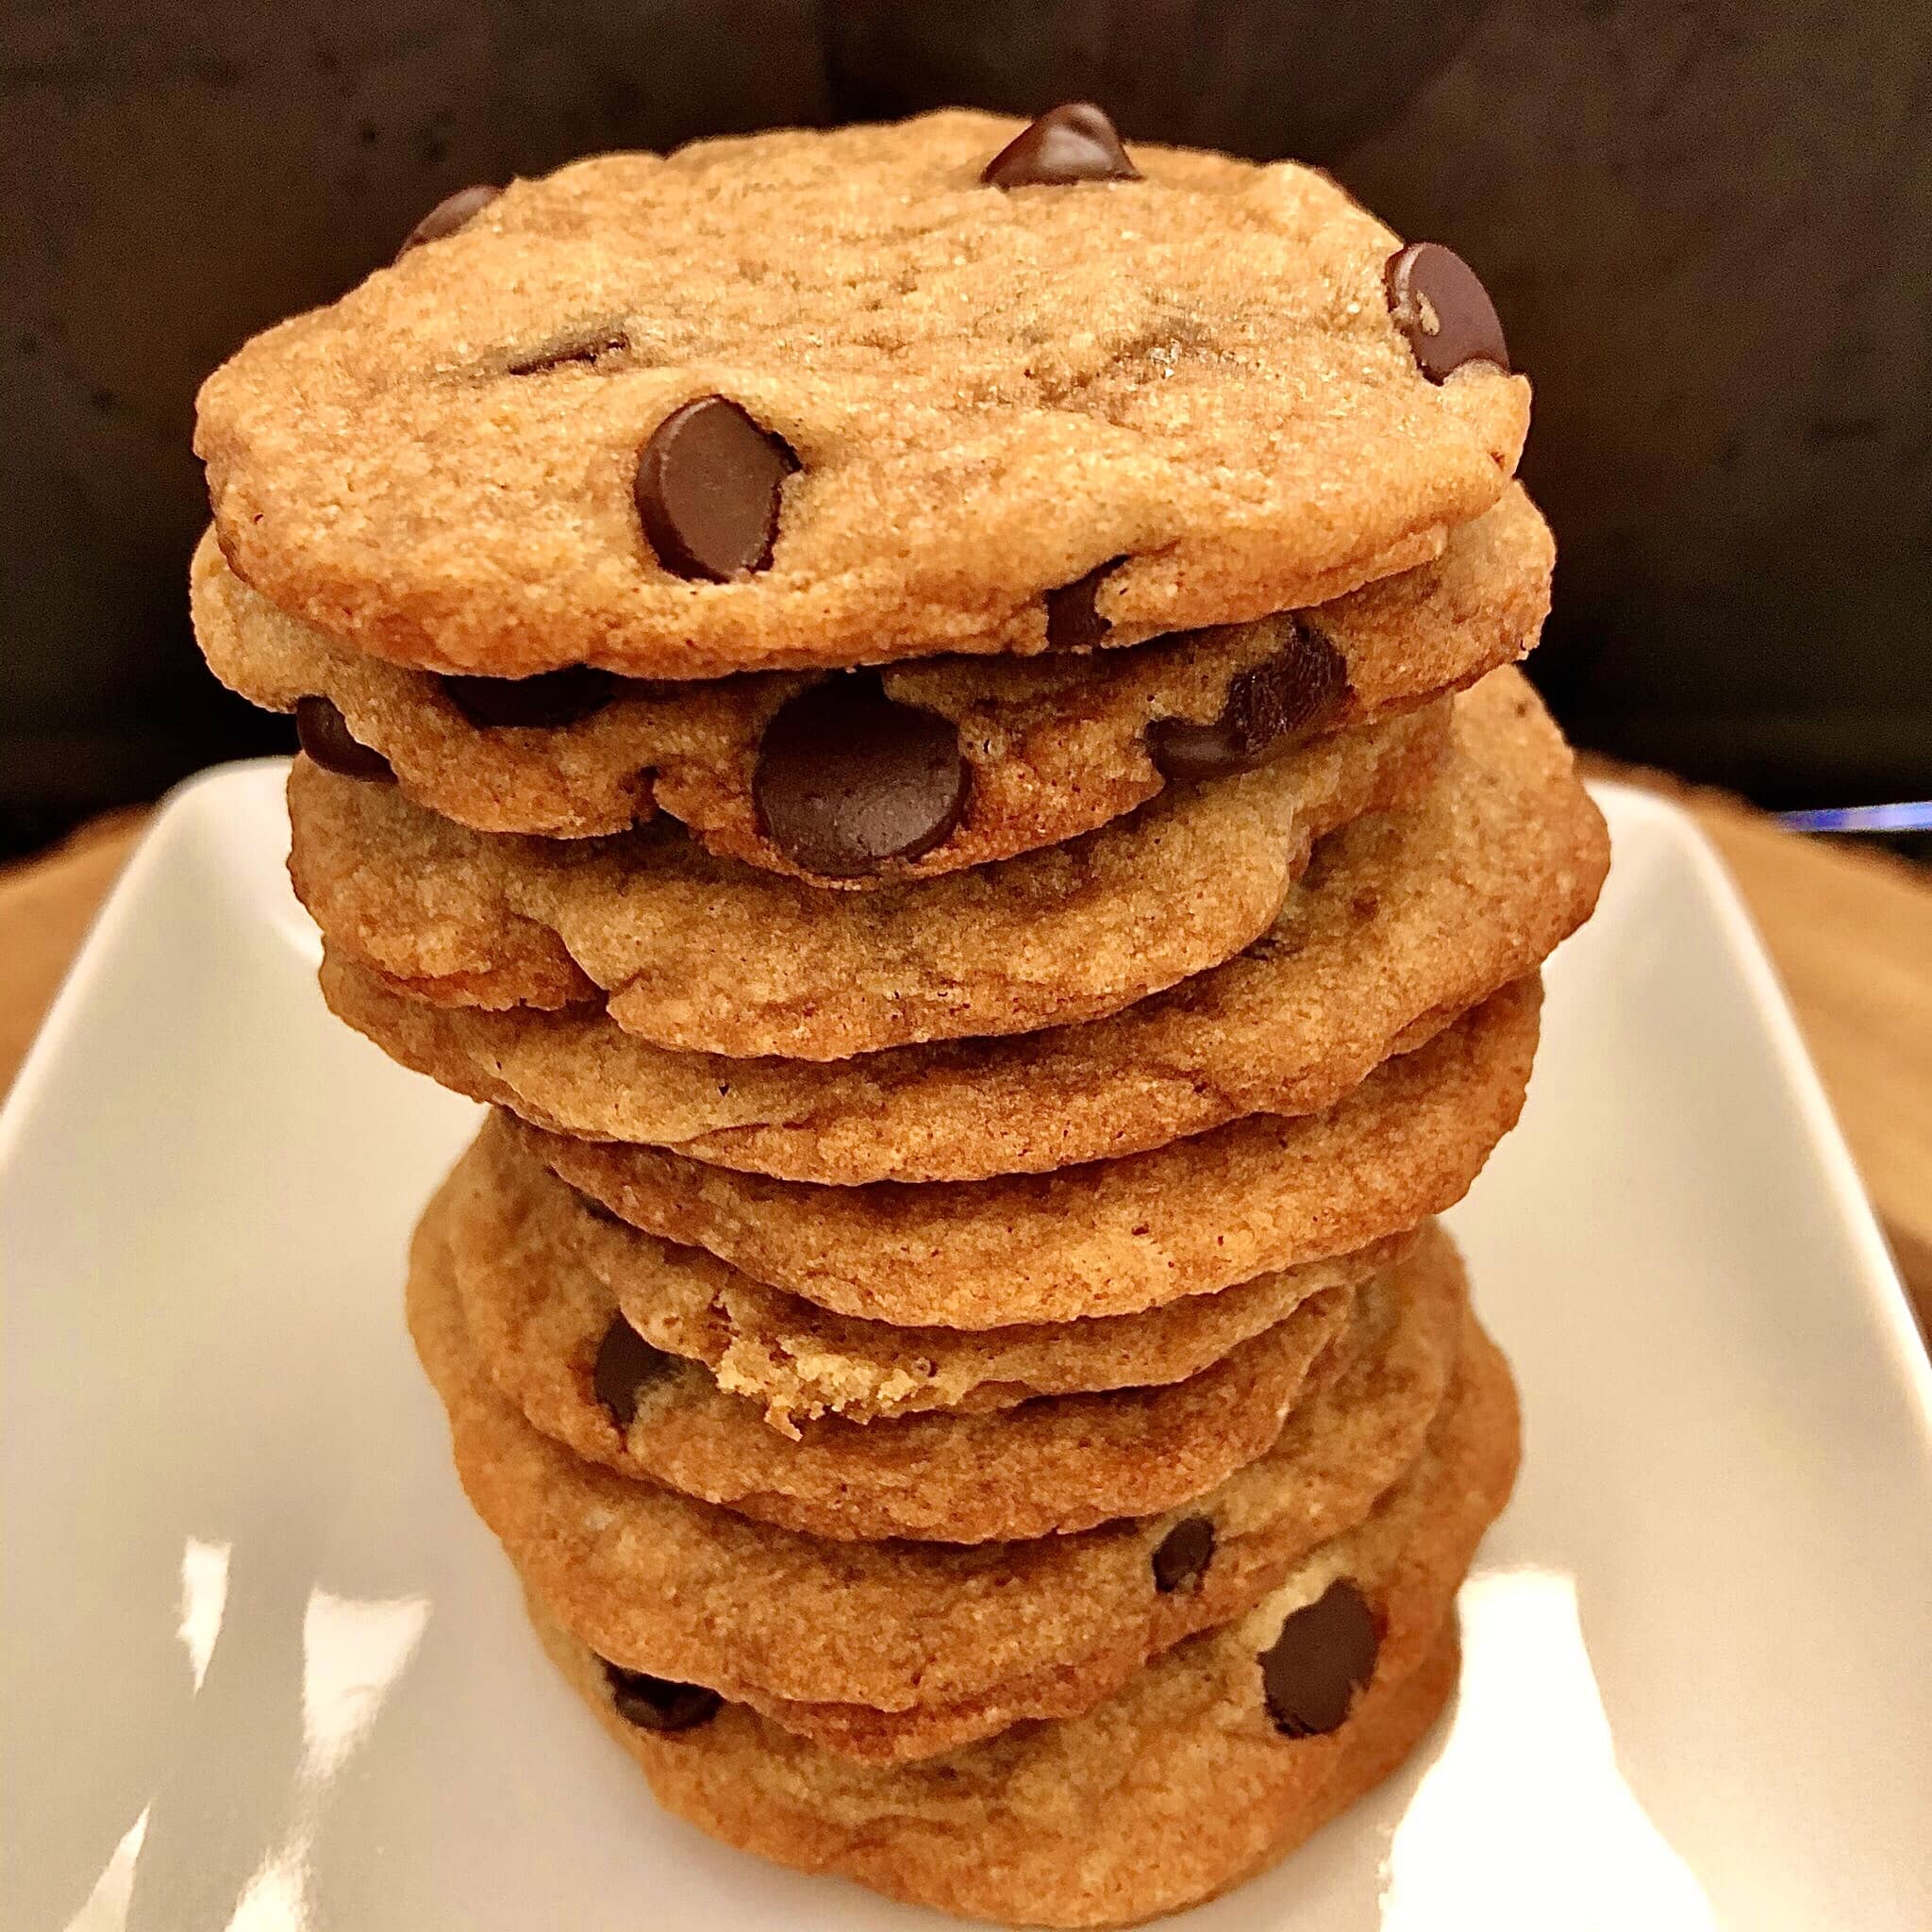 Best Vegan Chocolate Chip Cookies